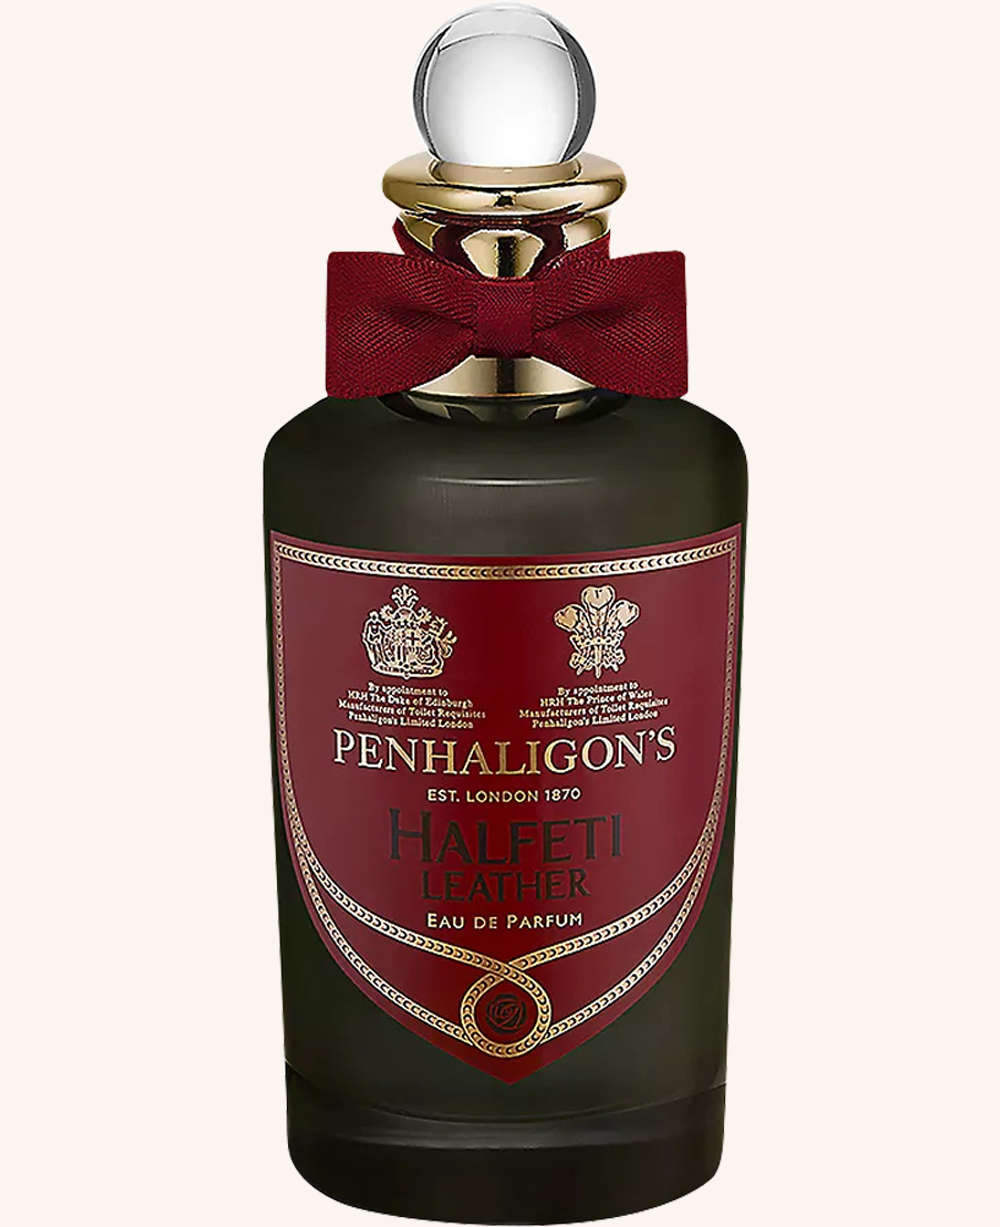 Penhaligon's Halfeti Leather eau de parfum